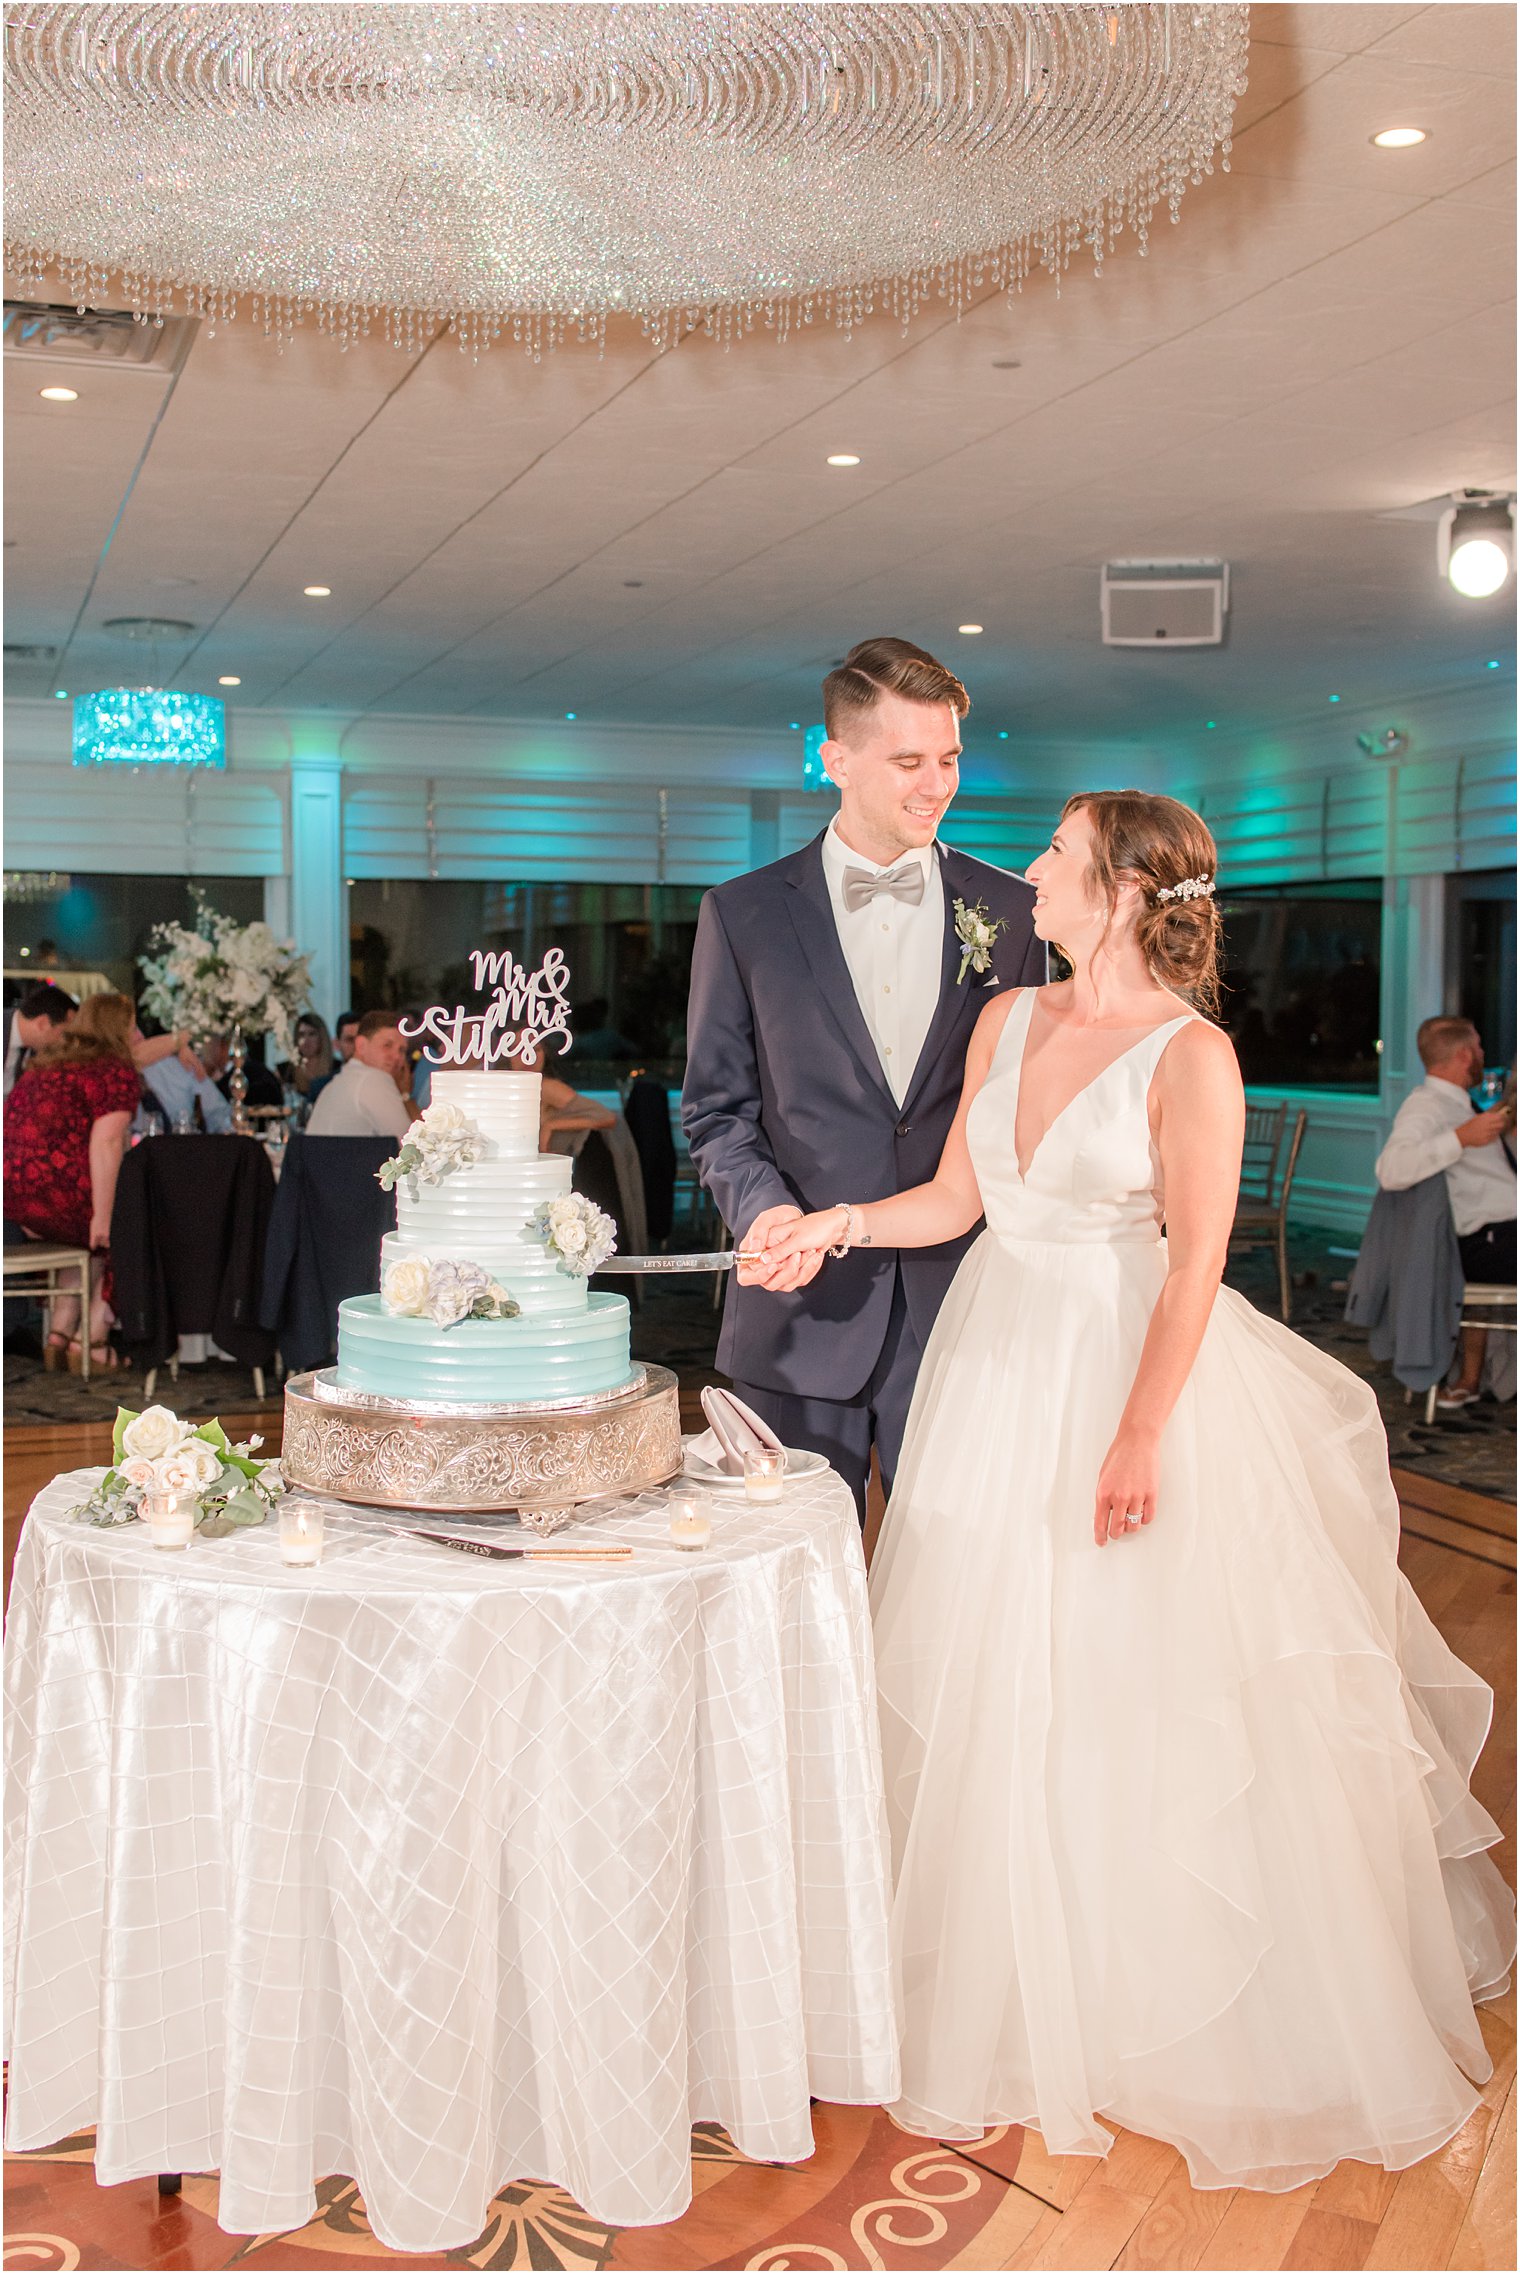 newlyweds cut wedding cake with blue icing